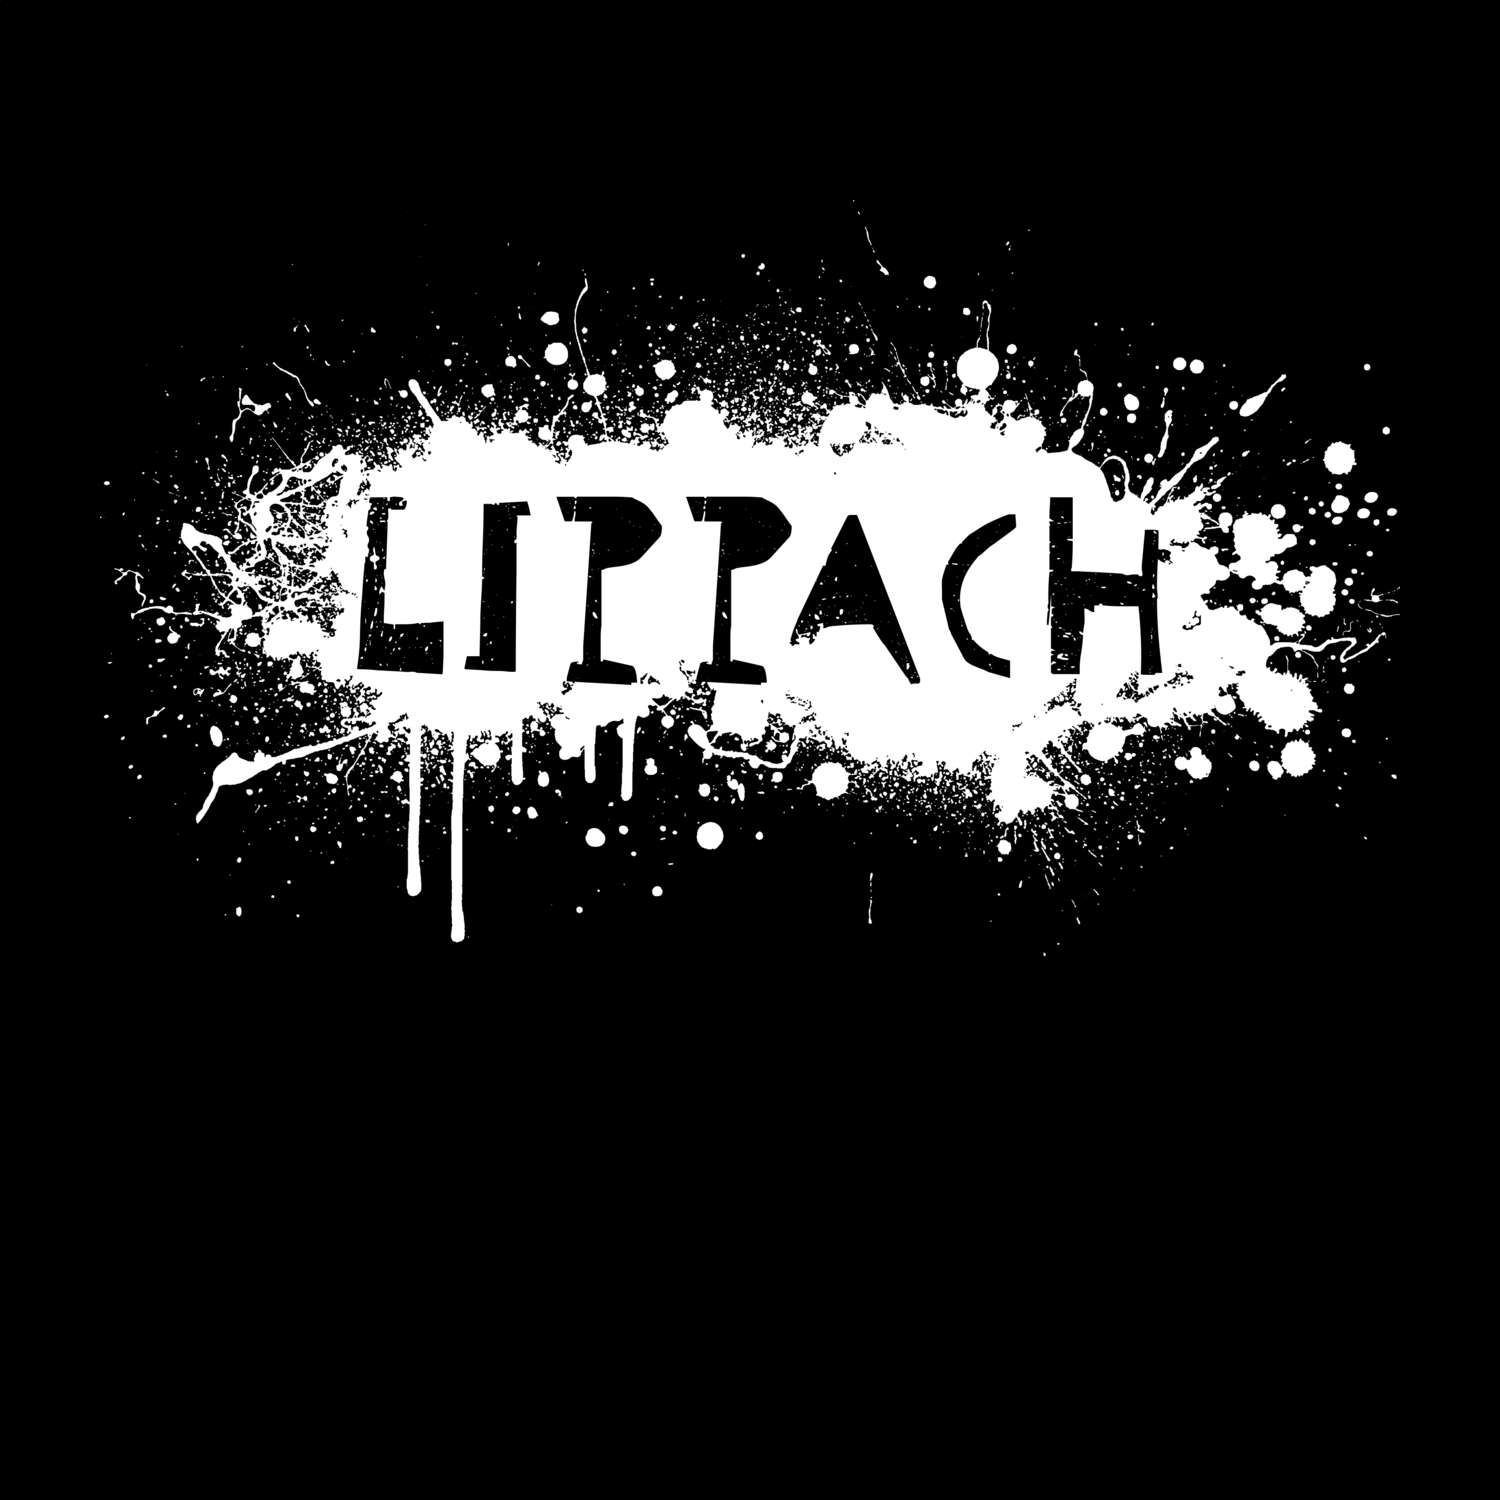 Lippach T-Shirt »Paint Splash Punk«